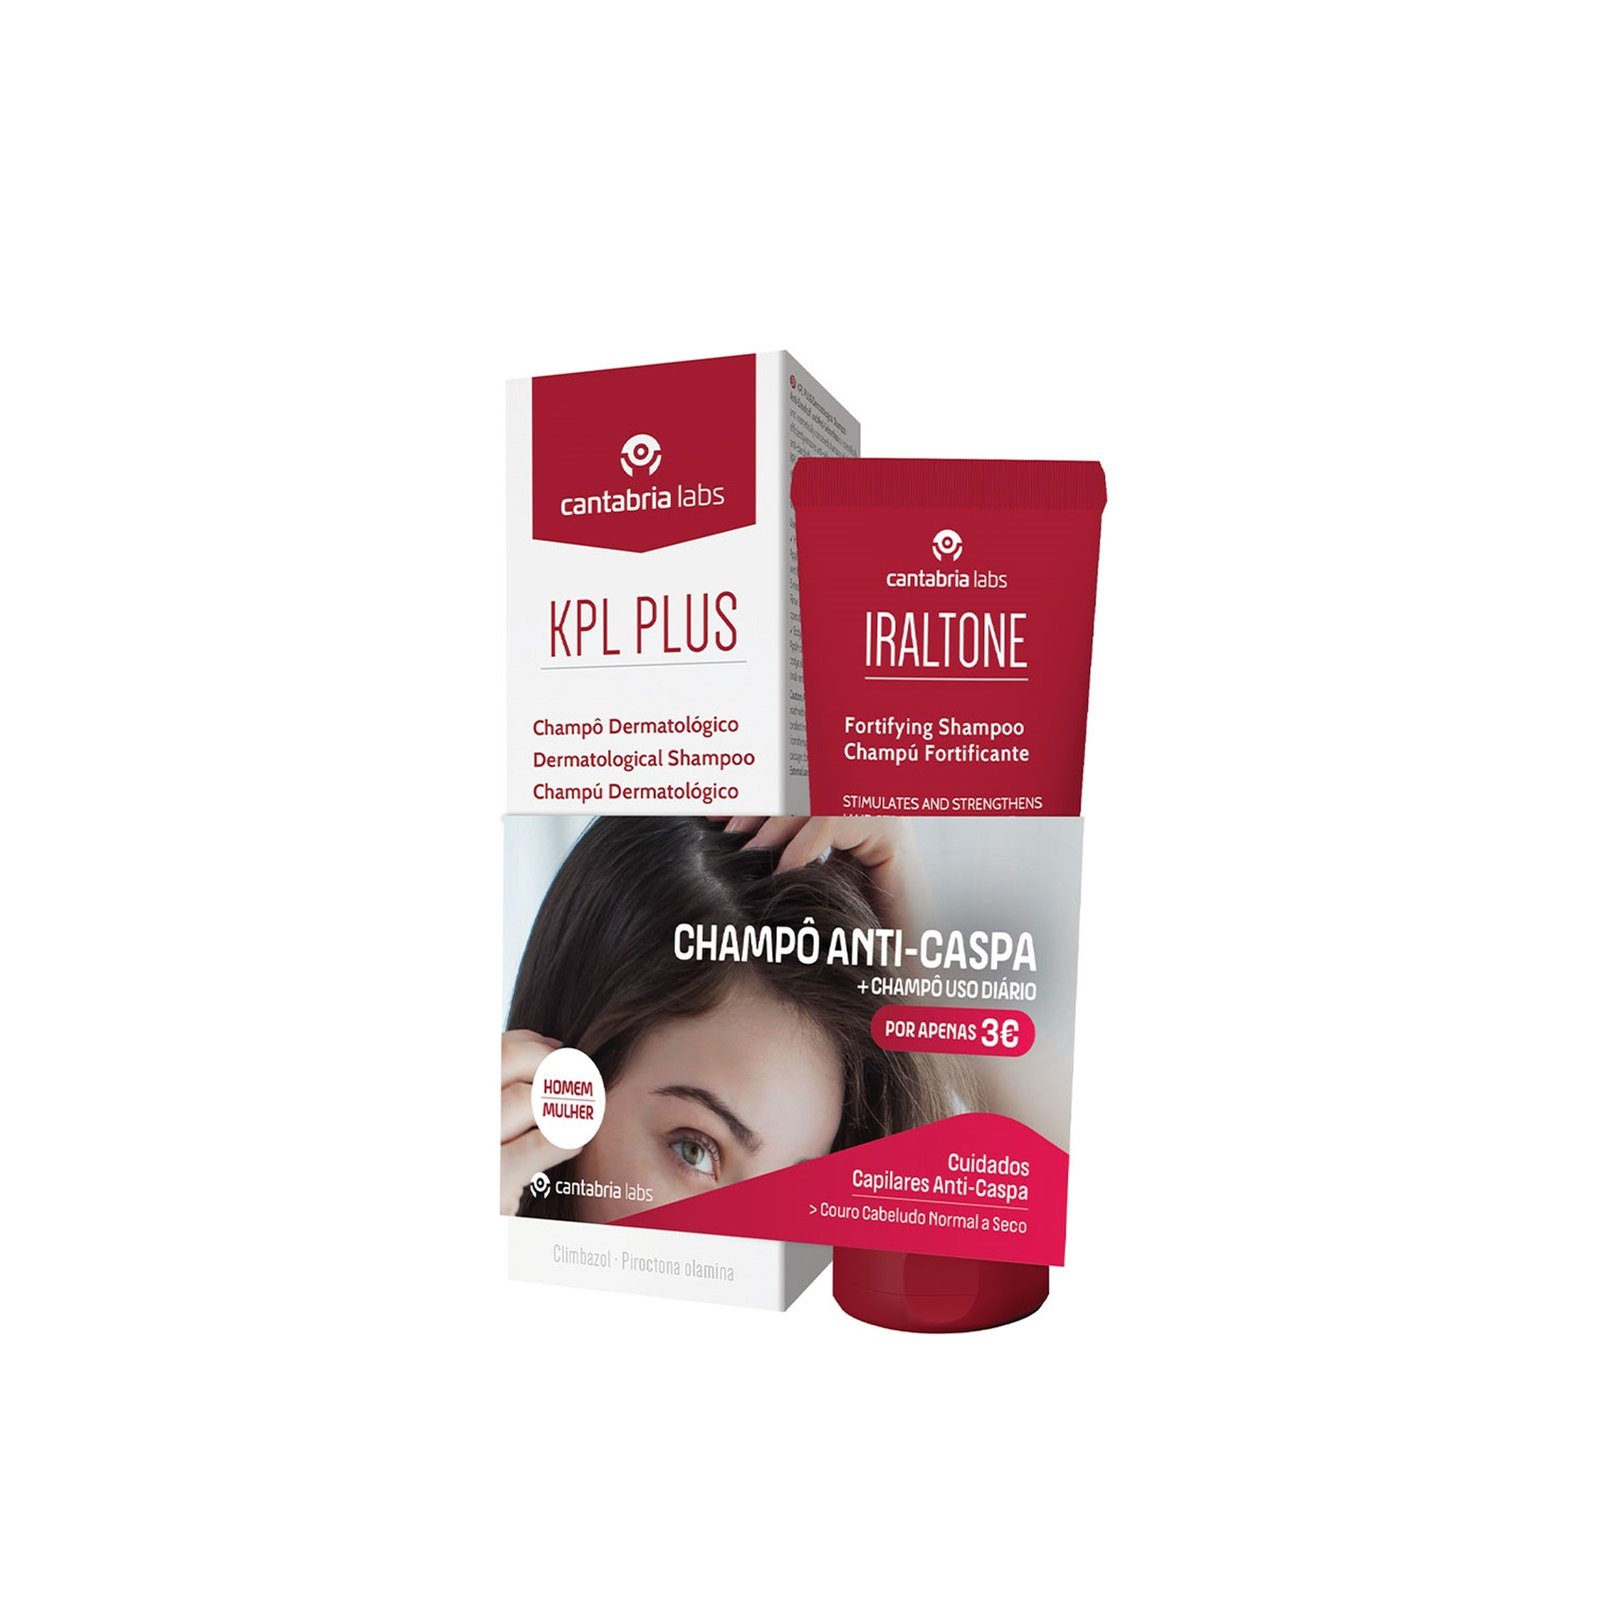 KPL Plus Dermatological Shampoo 200ml + Iraltone Fortifying Shampoo 200ml (6.76 fl oz + 6.76 fl oz)